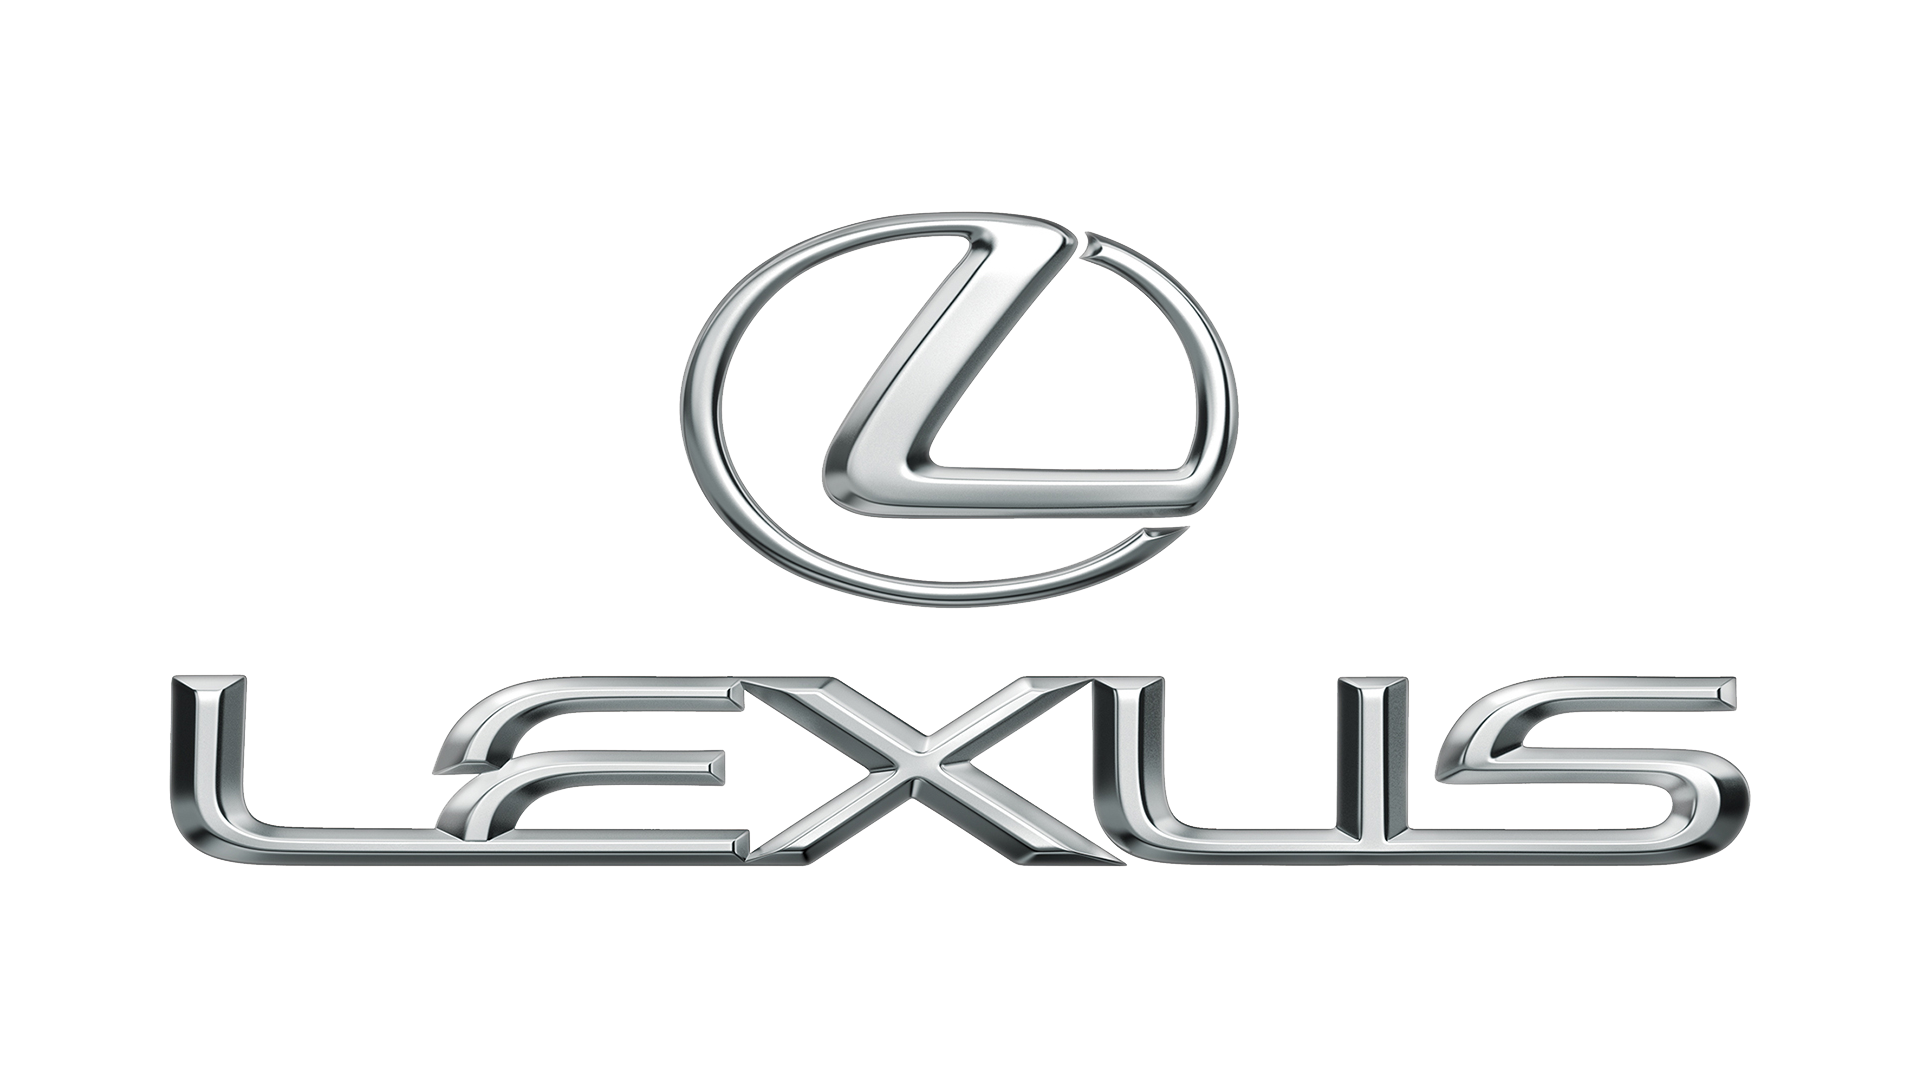 Lexus-logo-1988-1920x1080